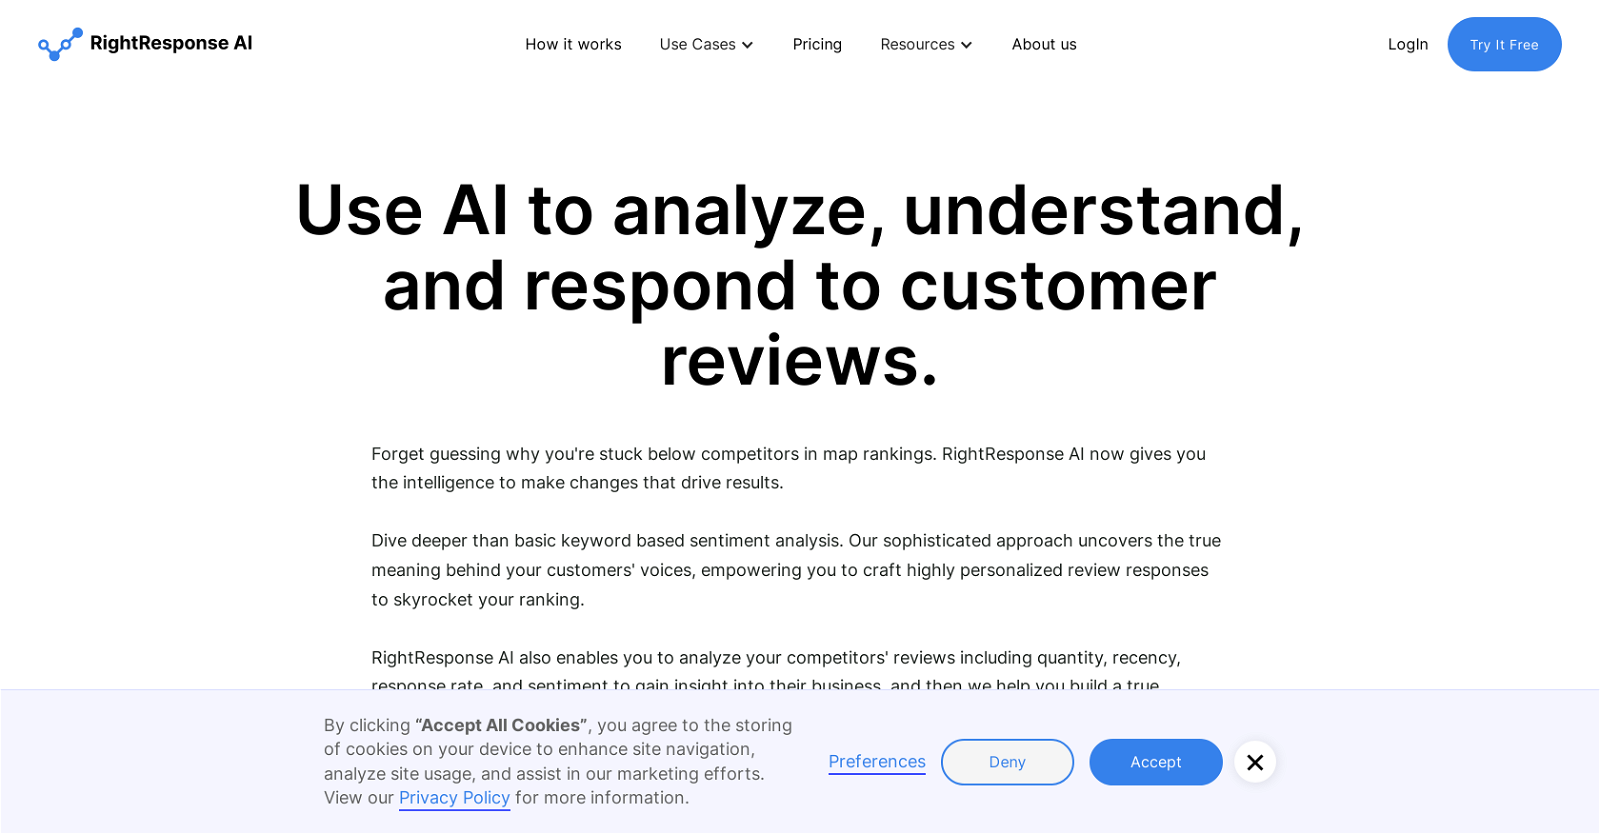 RightResponse AI website